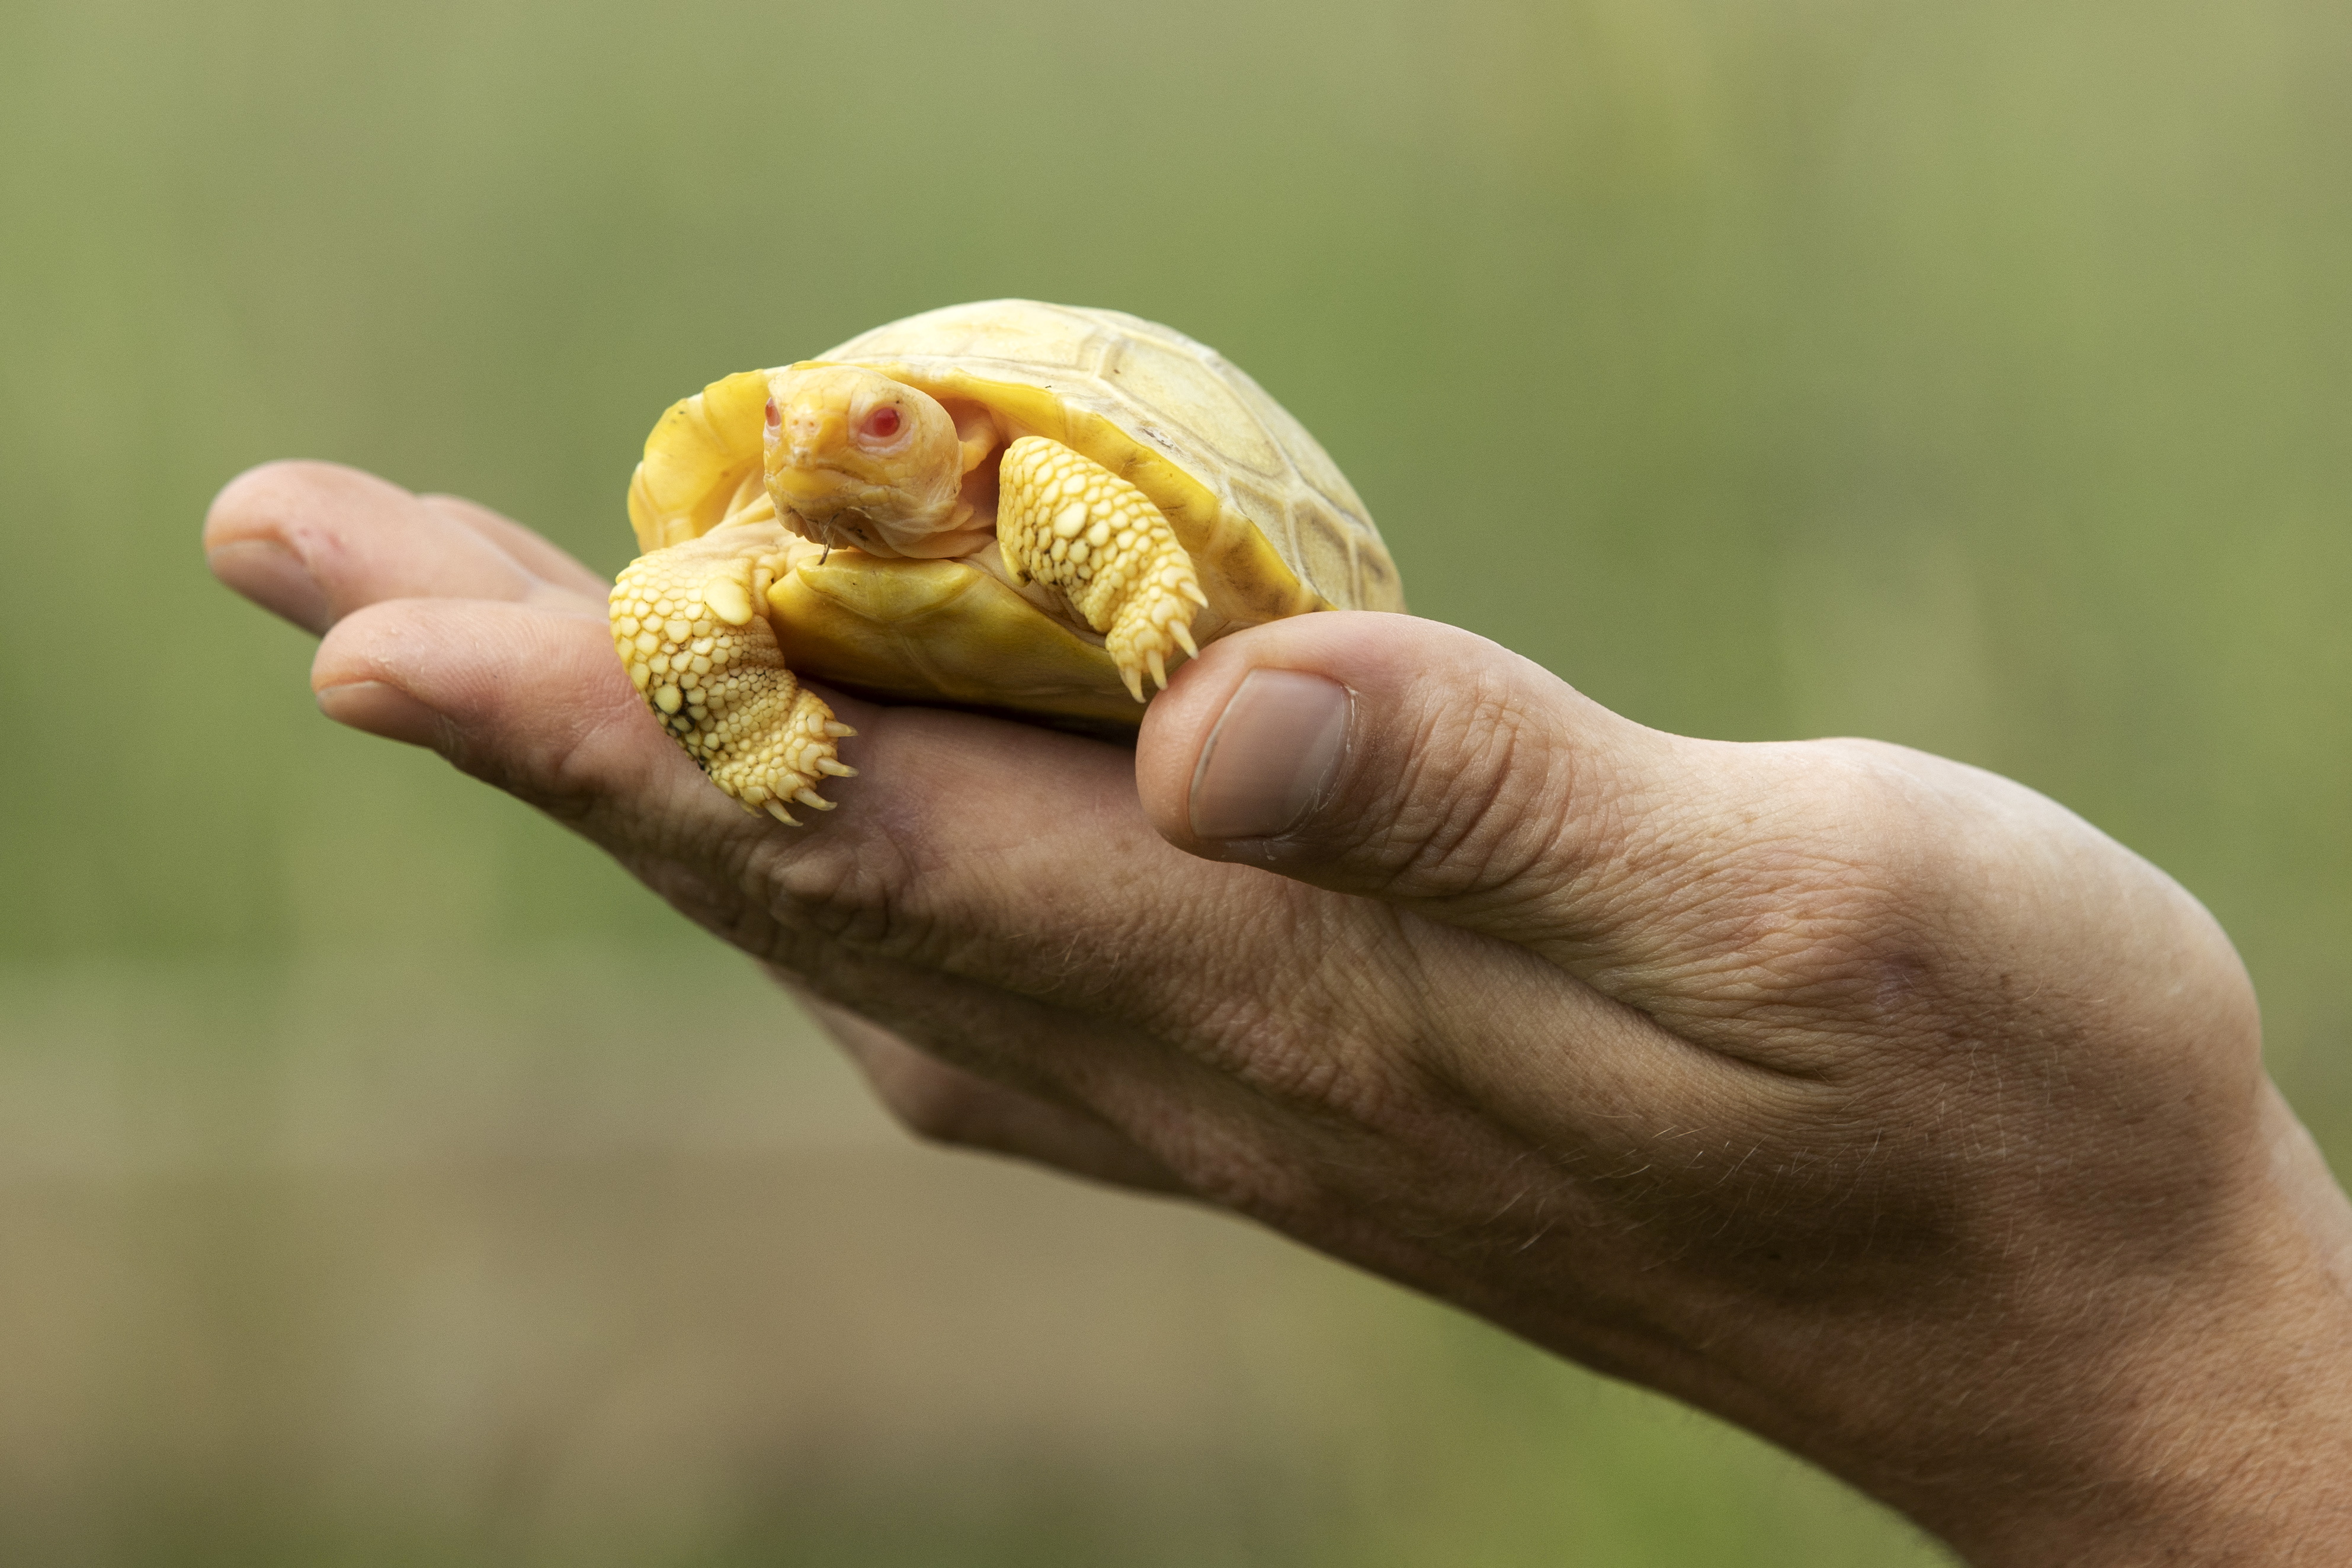 Thomas Morel of the Tropiquarium holds an albino baby Galapagos tortoise in Servion